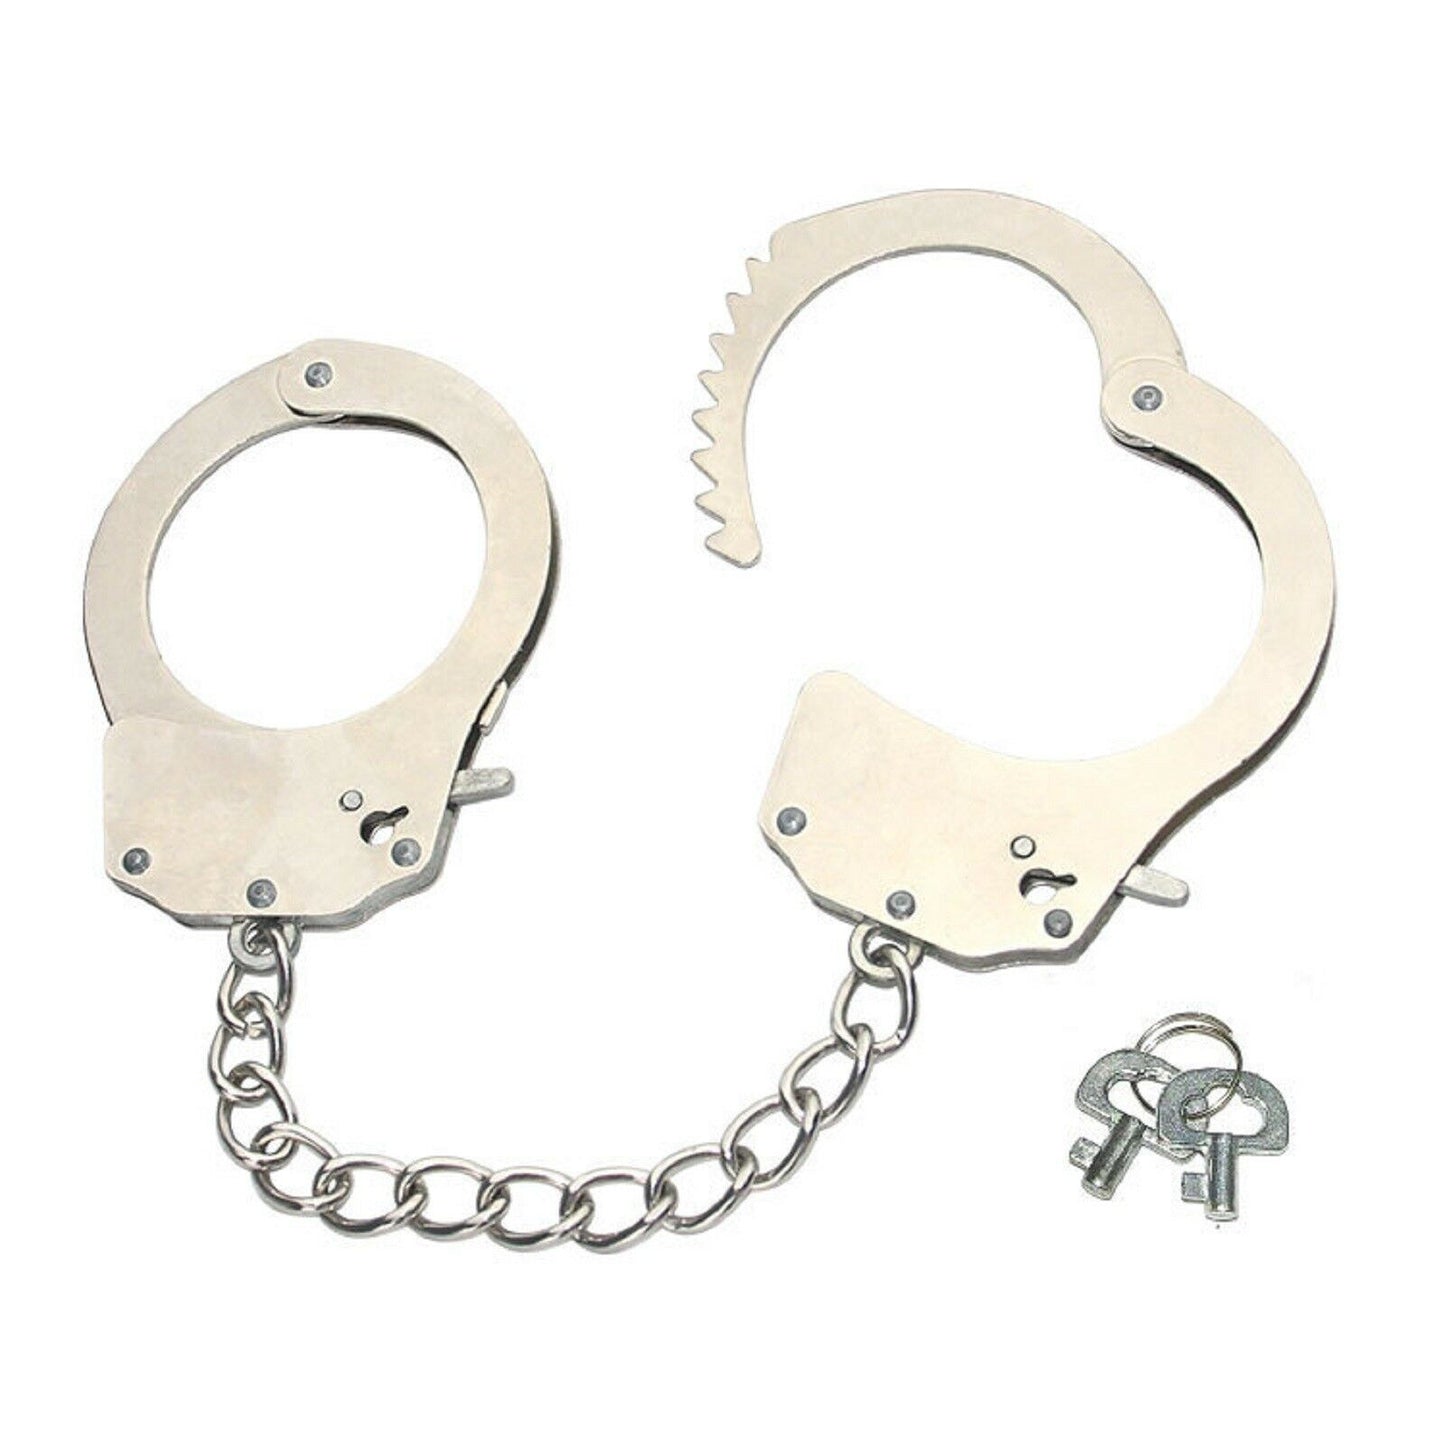 NEW Metal Handcuffs Bondage BDSM Hand Cuffs Sex Toy Fetish Restraint Steel S&M